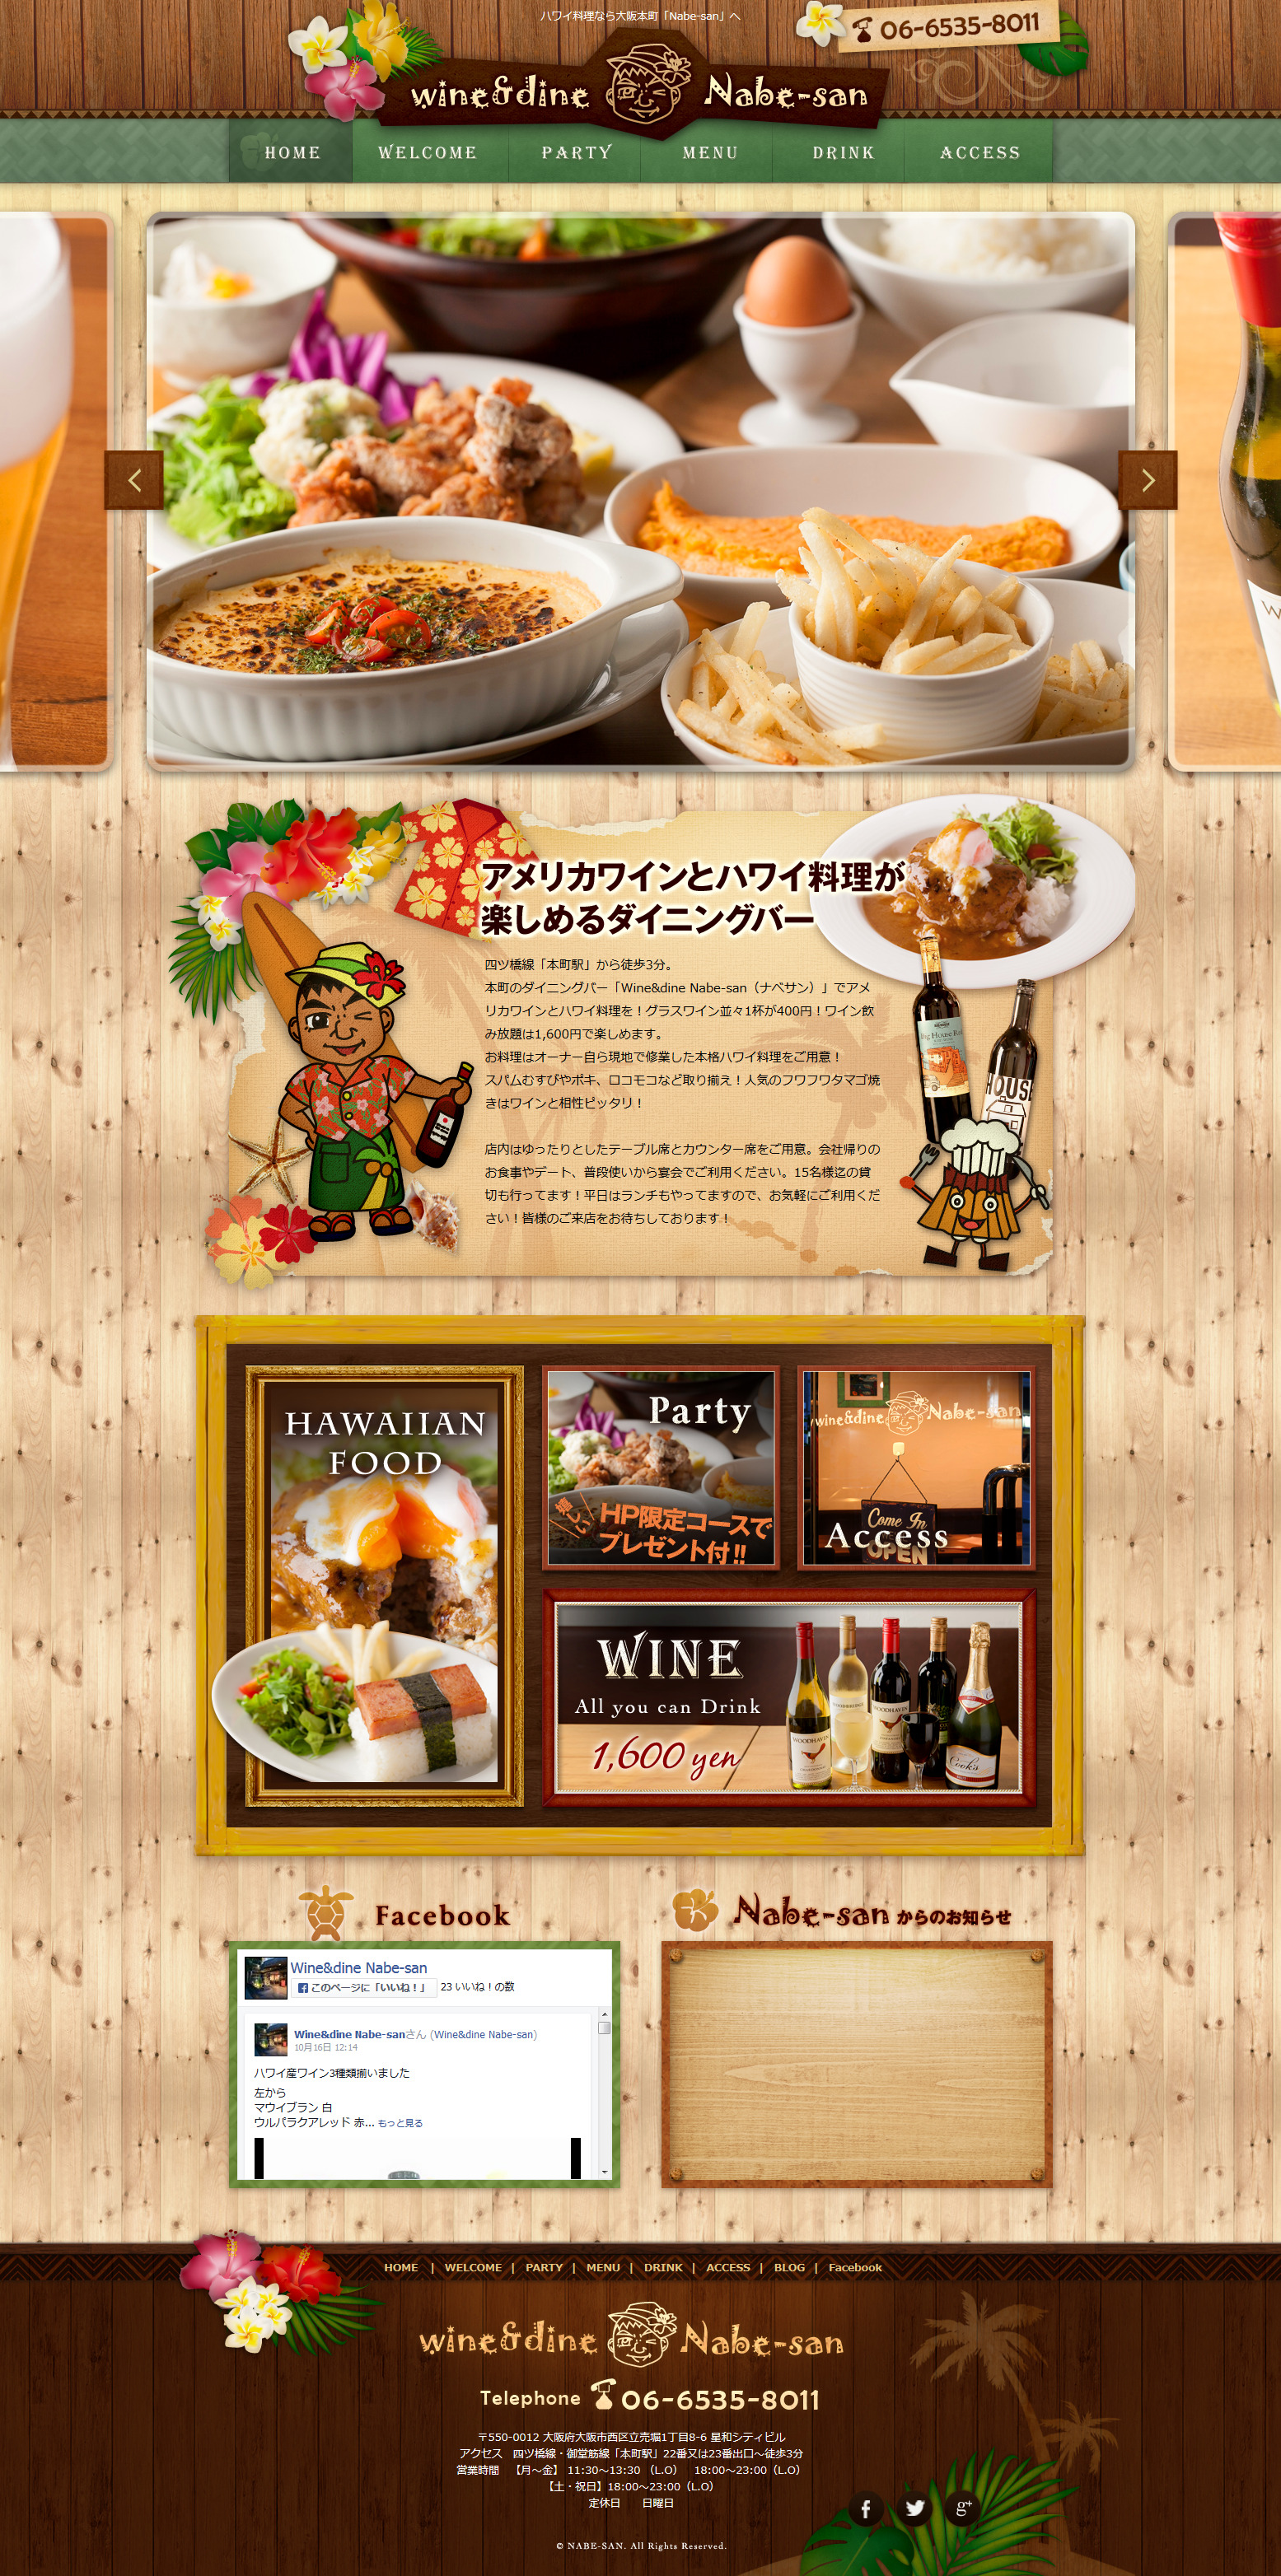 Wine&dine Nabe-san